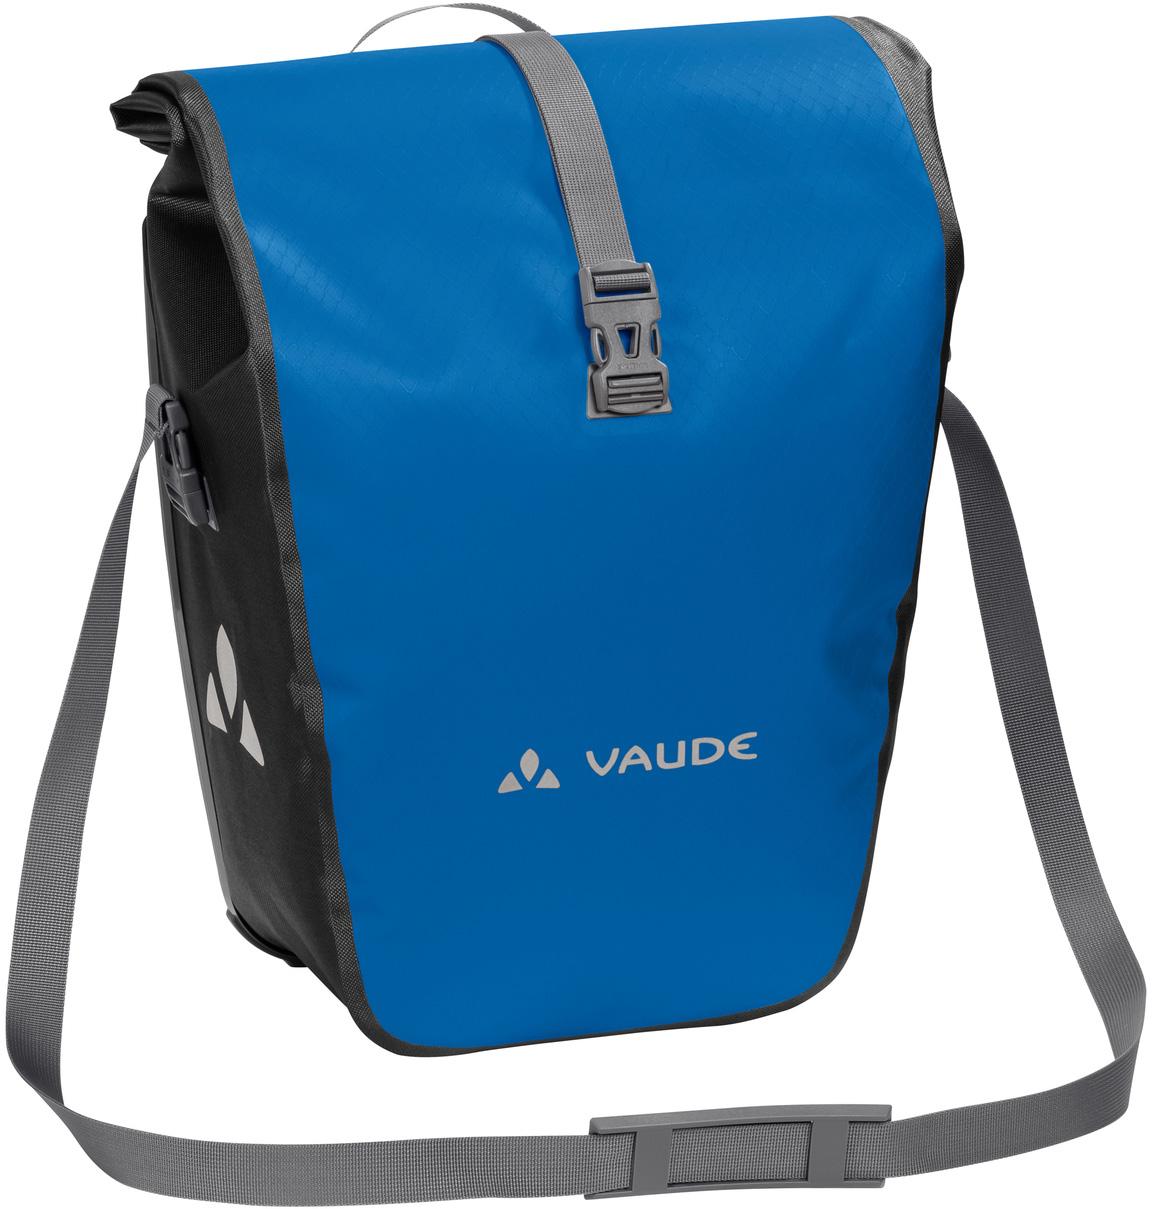 Vaude Aqua Rear Pannier Bags (pair) - Blue